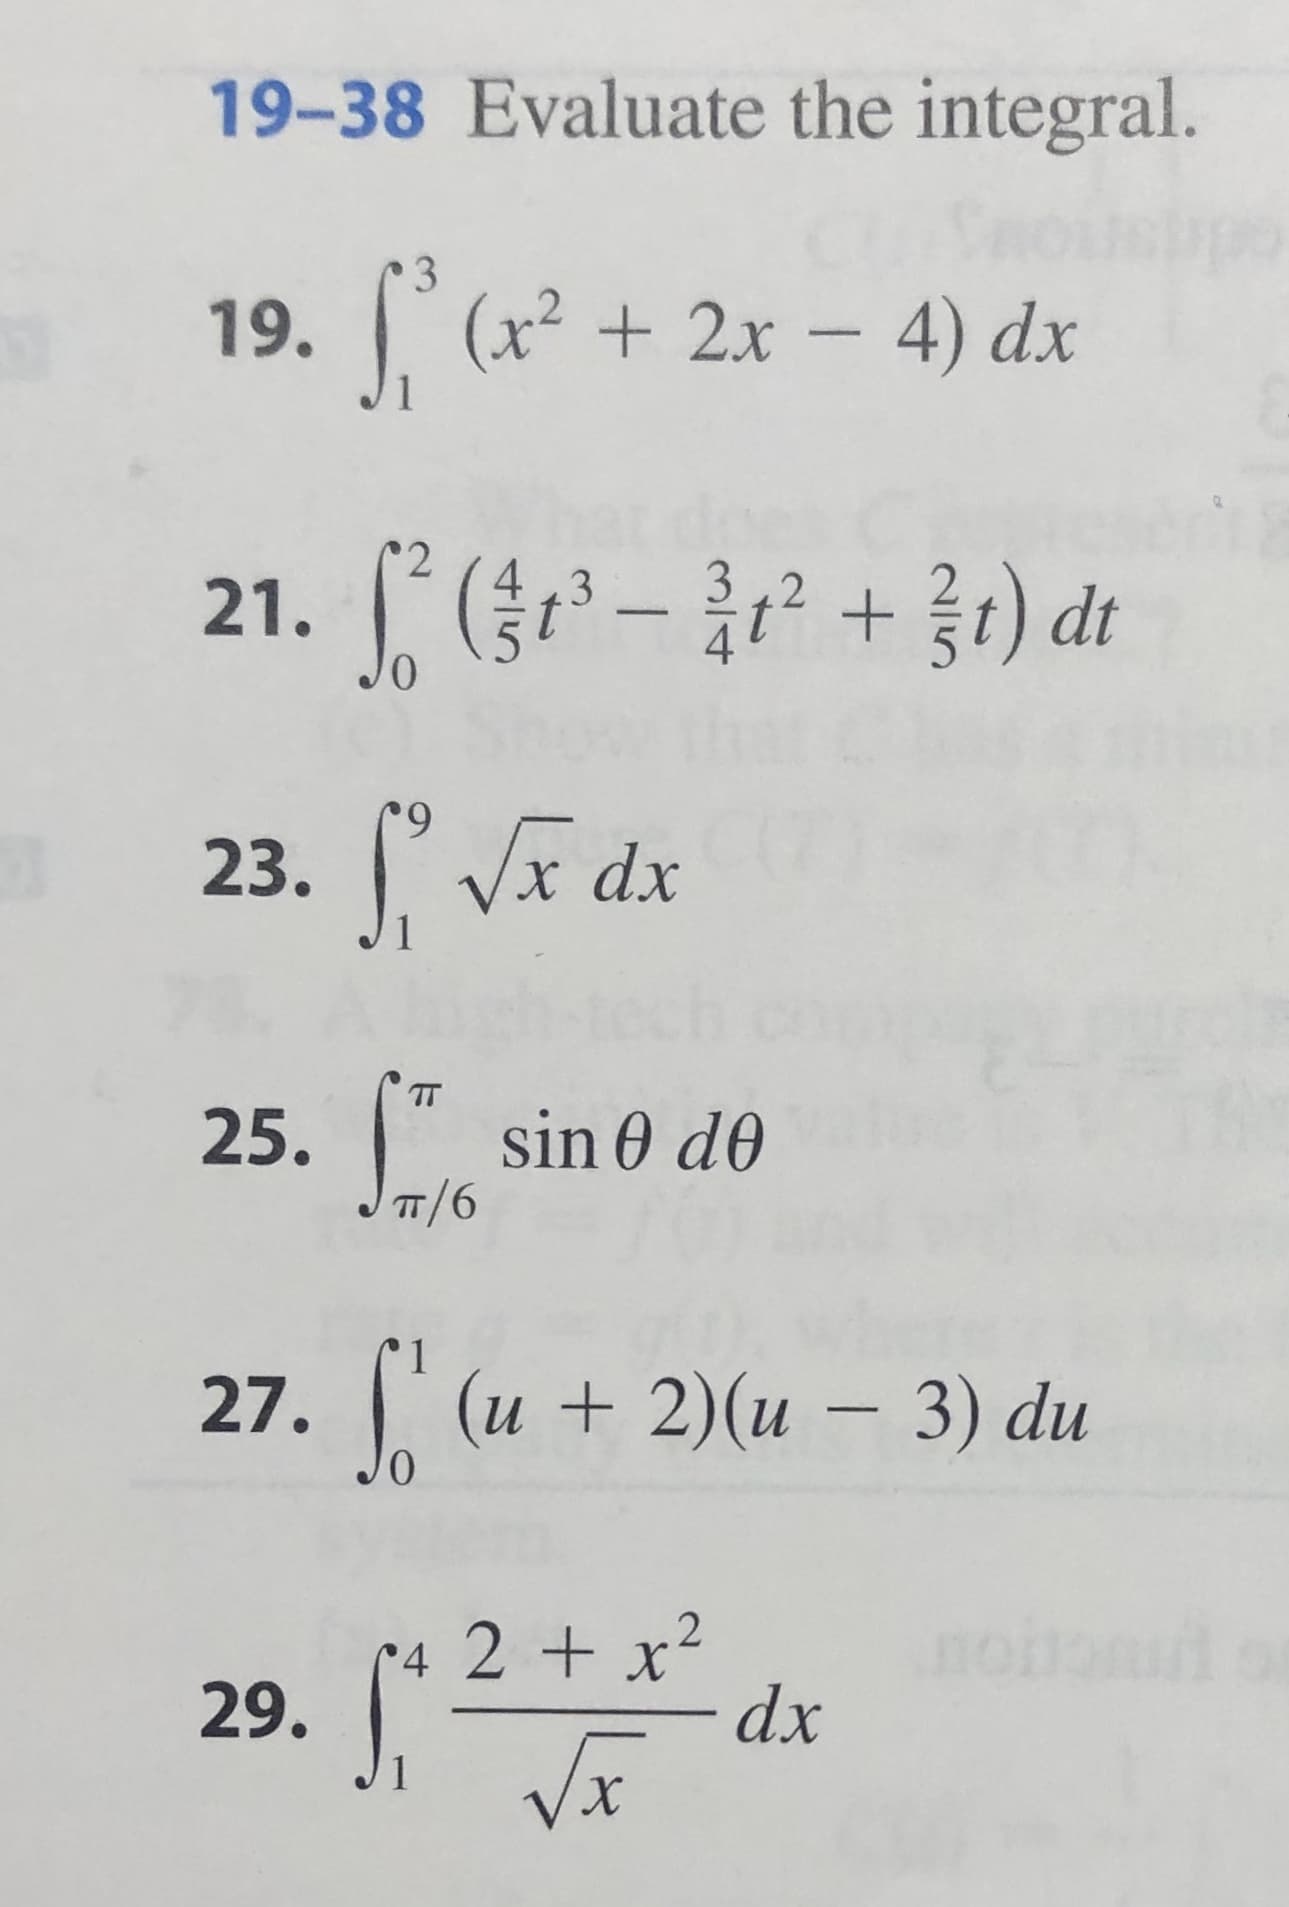 19-38 Evaluate the integral.
19. (x22x - 4) dx
21. -
+31) dt
3
2
23.Vx dx
1
TT
25. sin 0 d0
T/6
27.(u2)(u - 3) du
nobo
4 2 +x2
dx
Vx
29.
1
